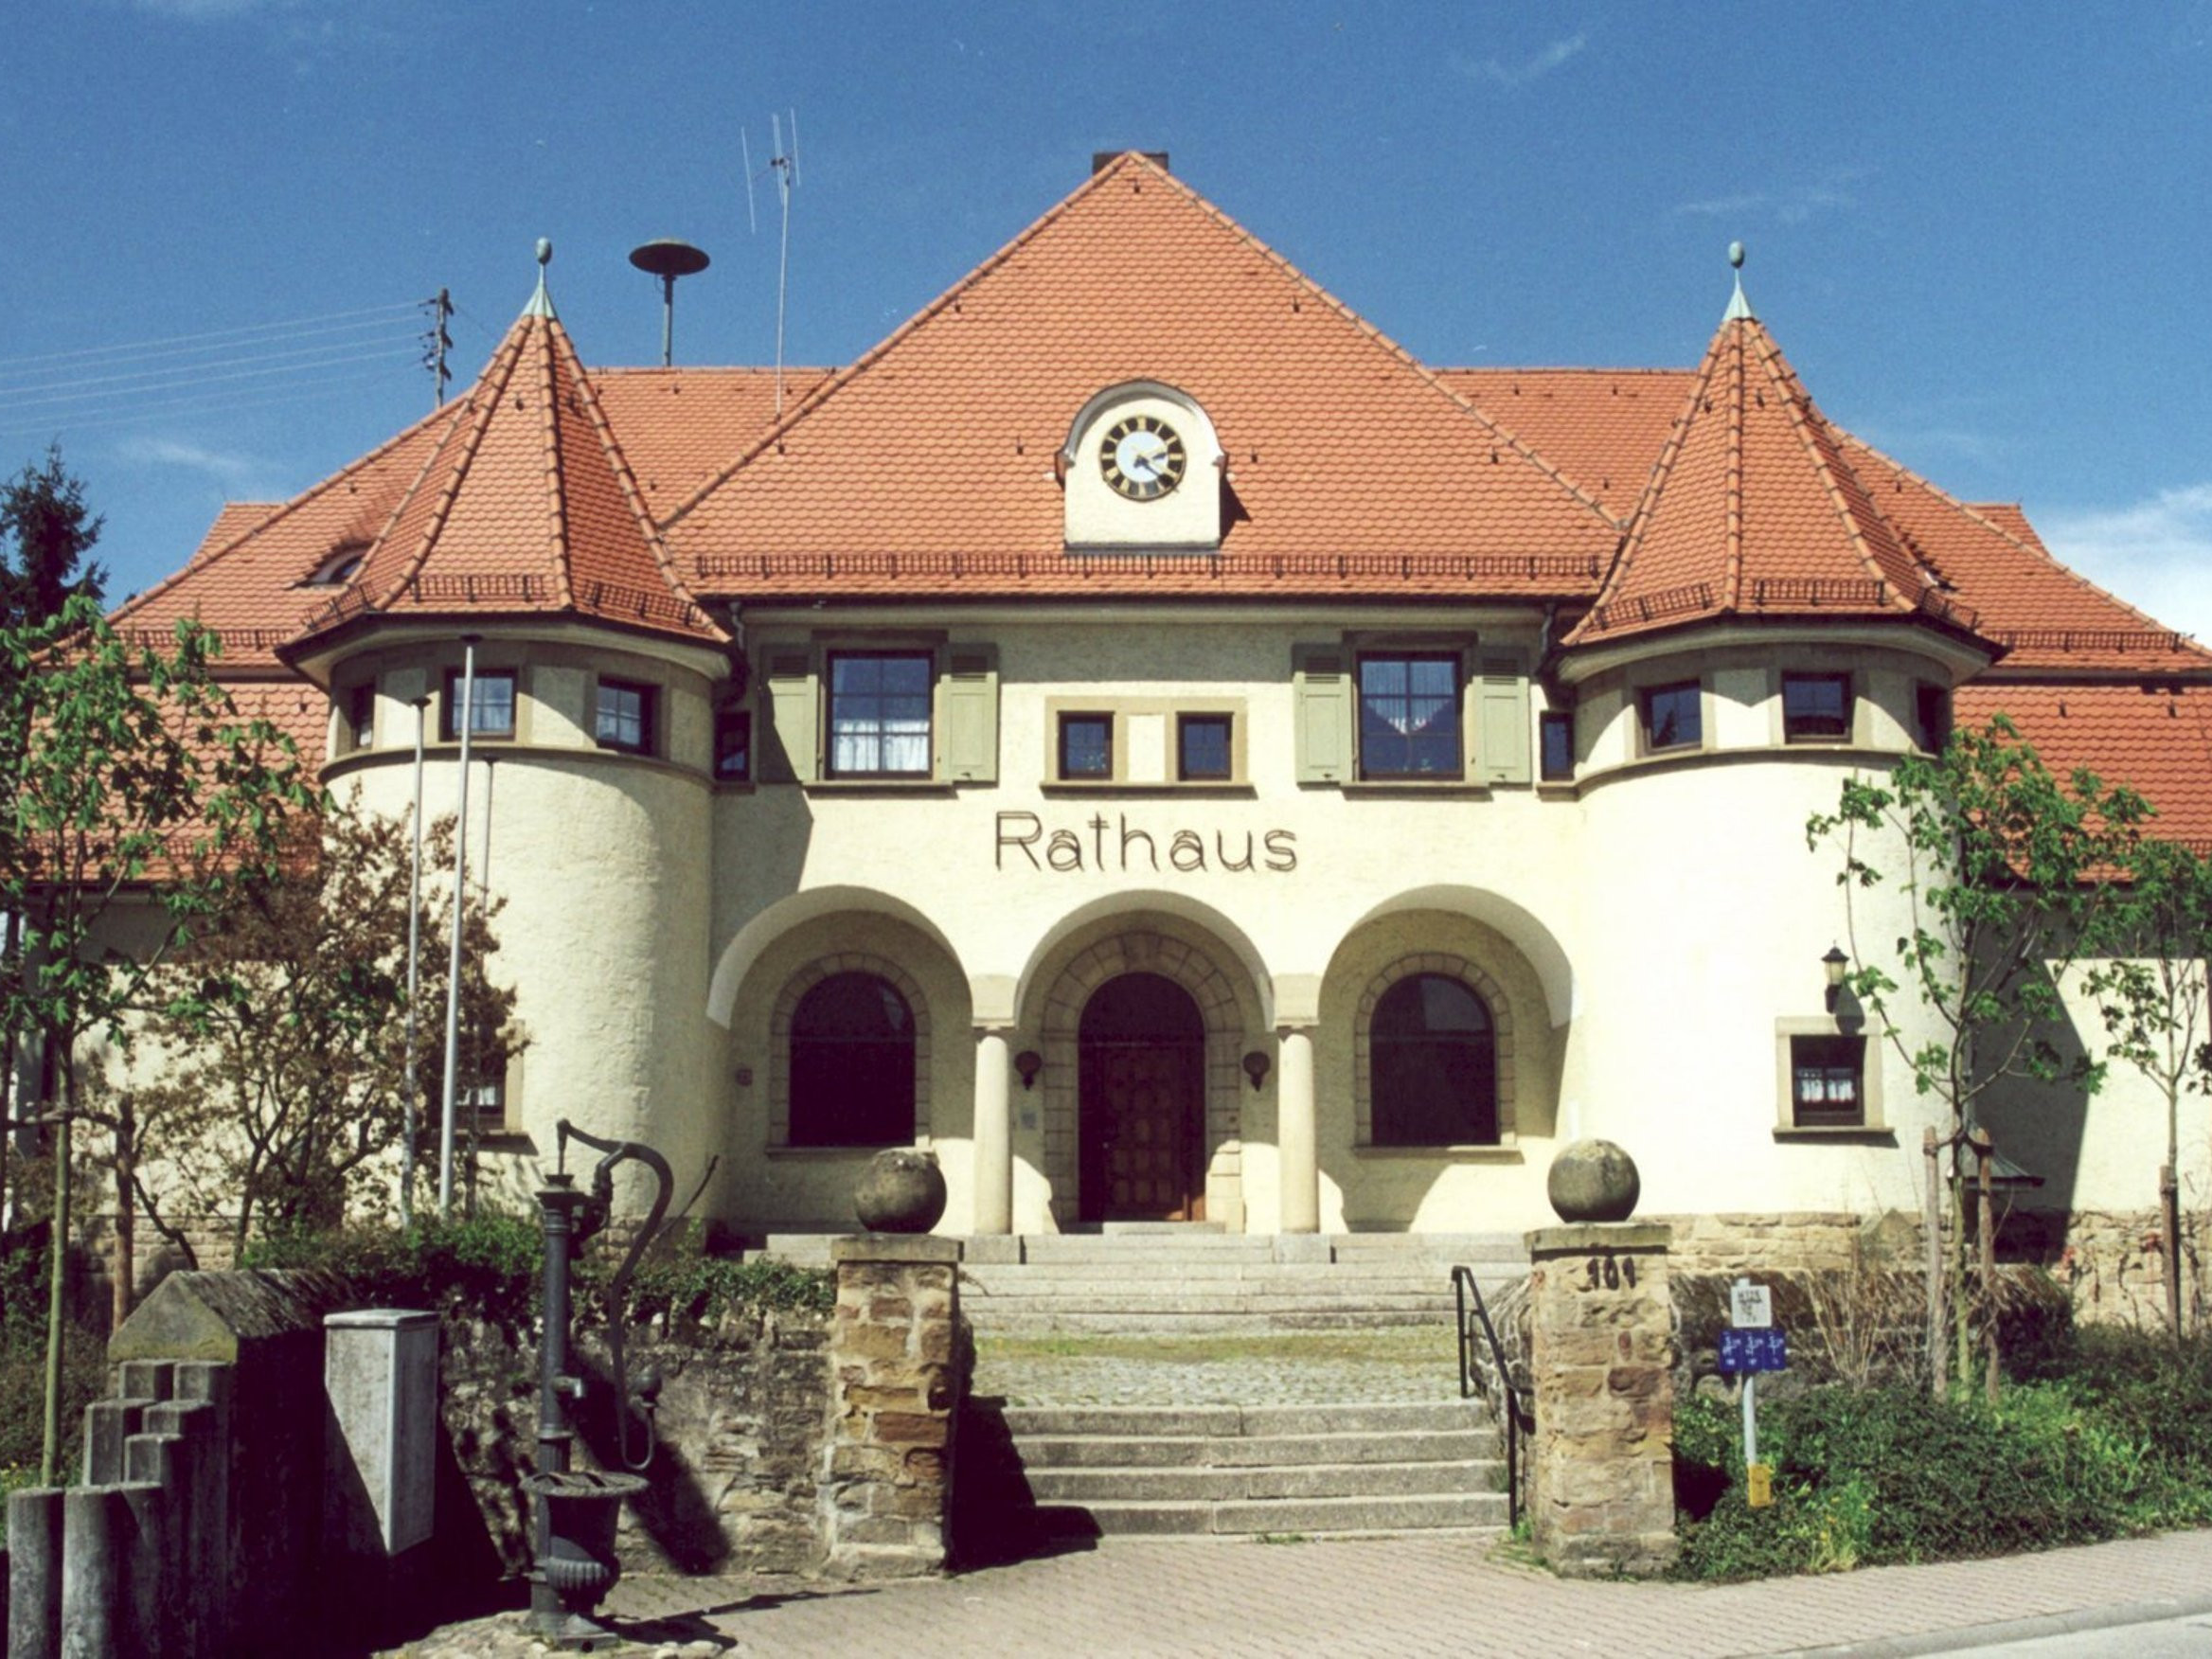  Rathaus Ittlingen 